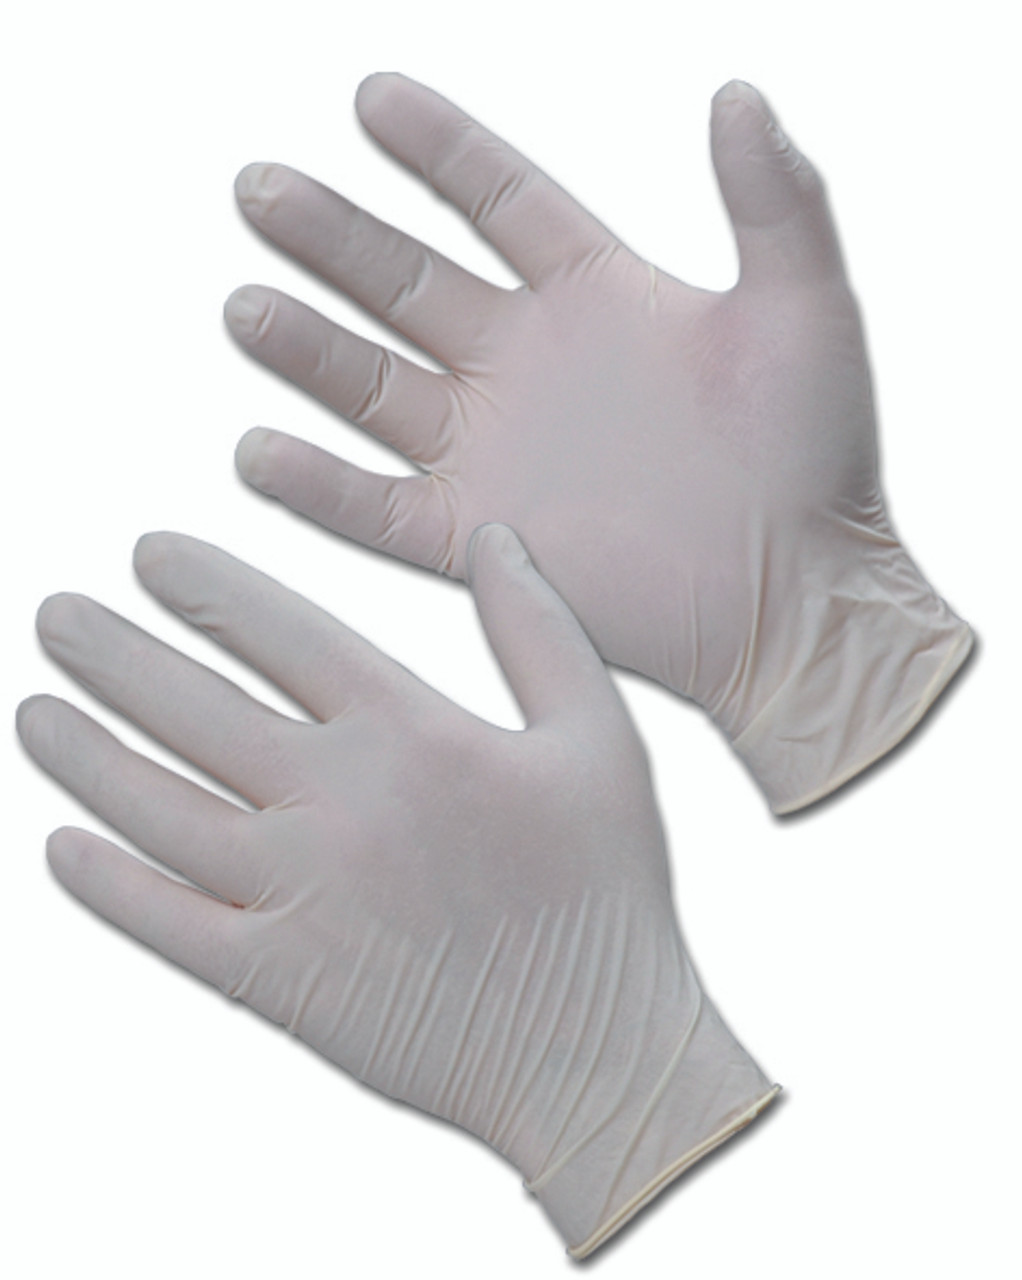 Latex Disposable Gloves, Unpowdered, Large, 100 Per Box